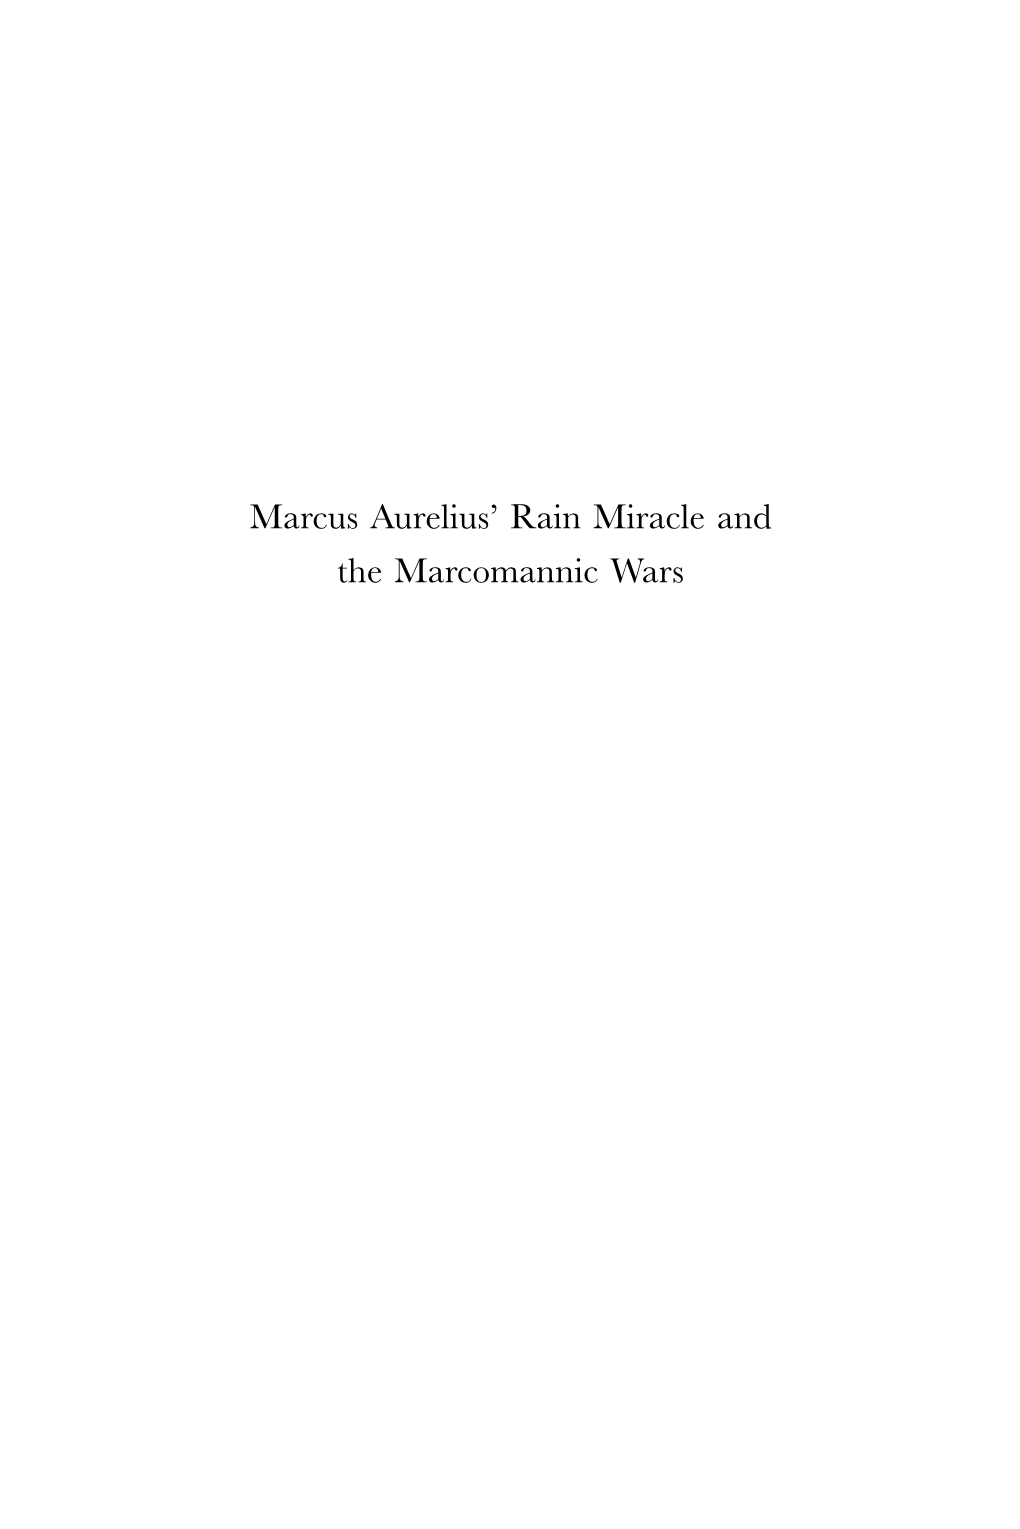 Marcus Aurelius' Rain Miracle and the Marcomannic Wars